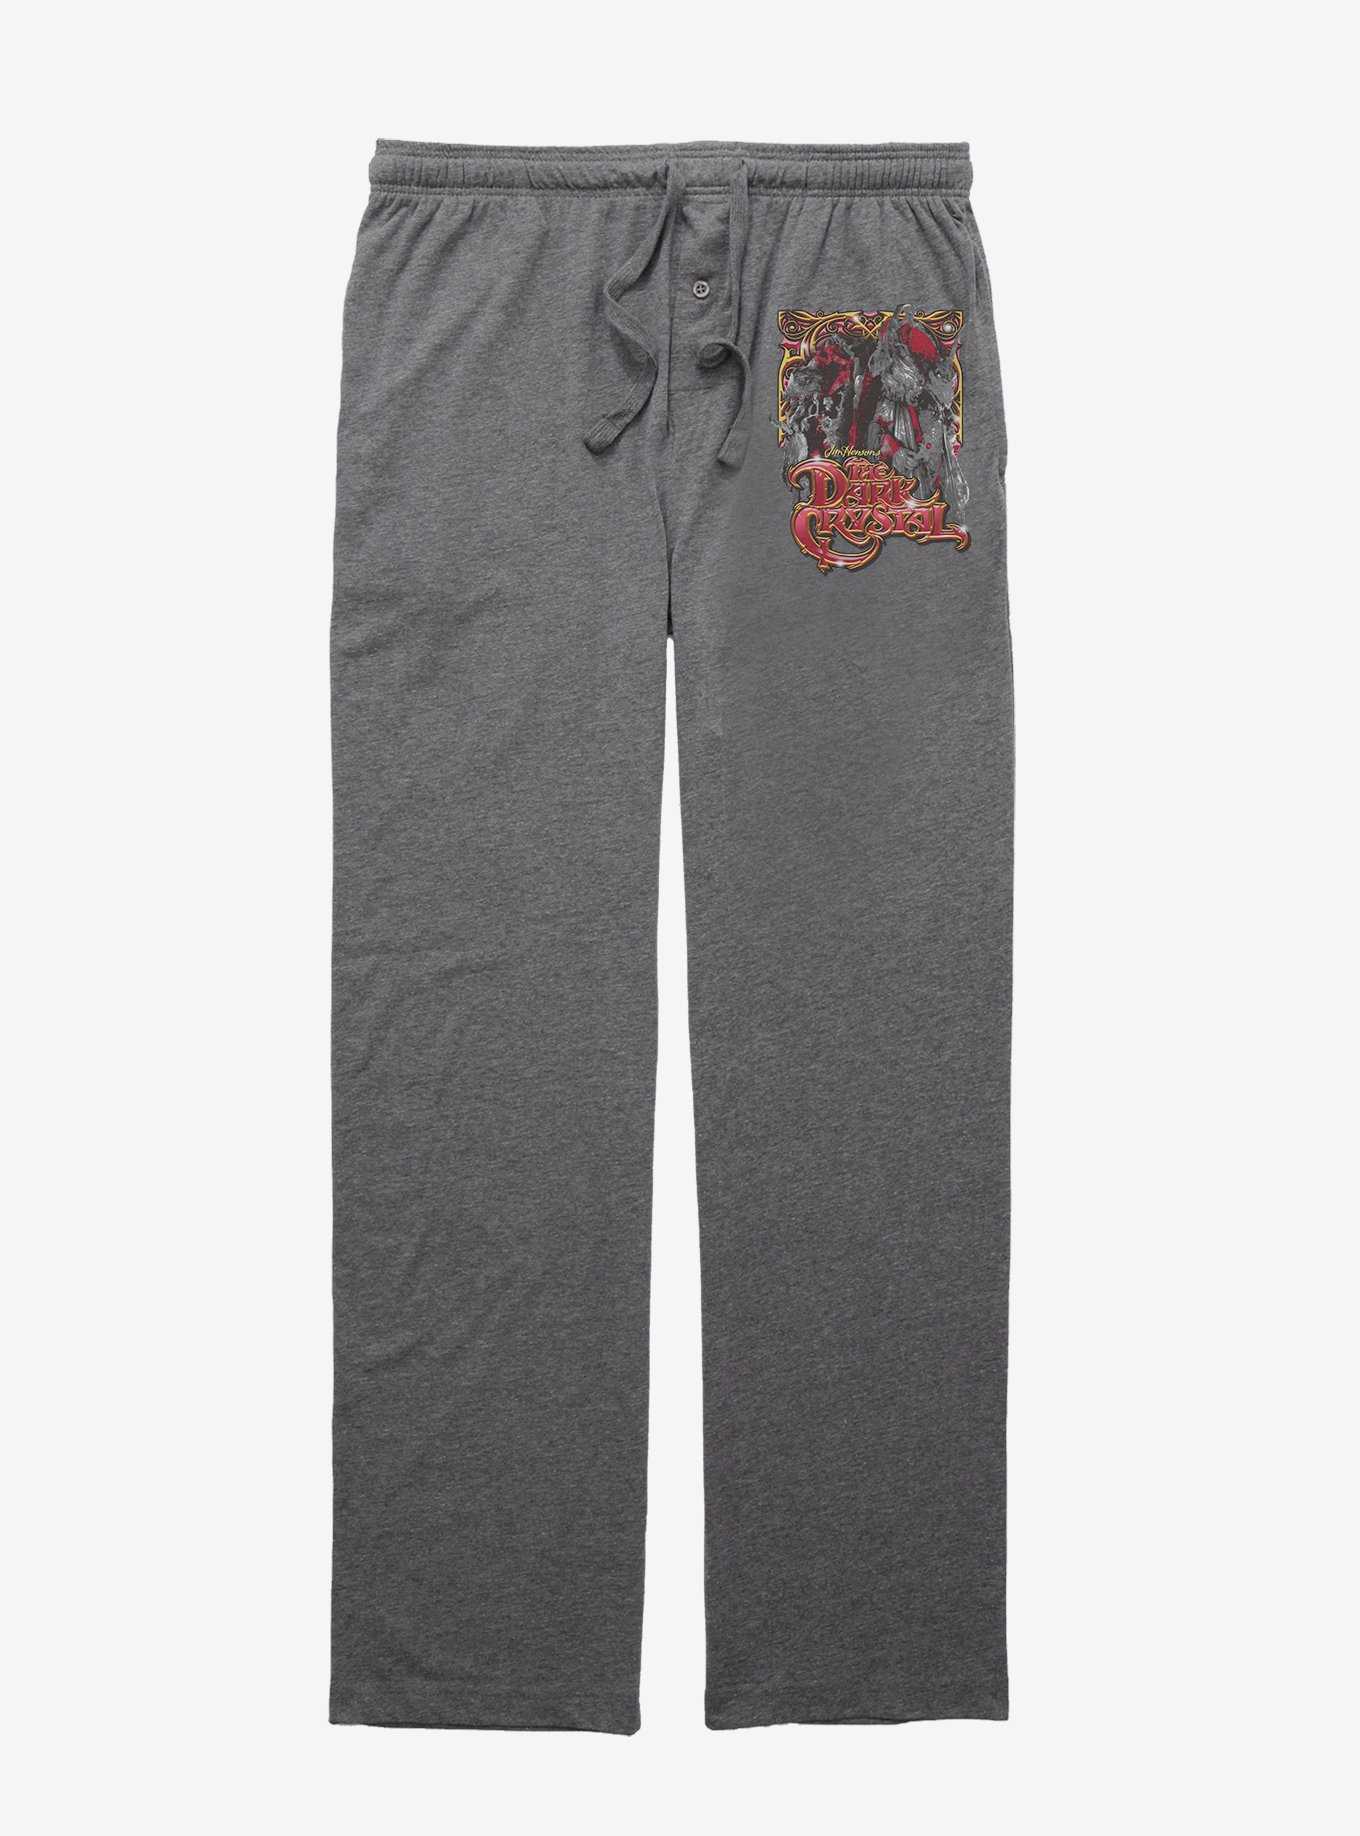 Jim Henson's The Dark Crystal Skeksis Pajama Pants, , hi-res